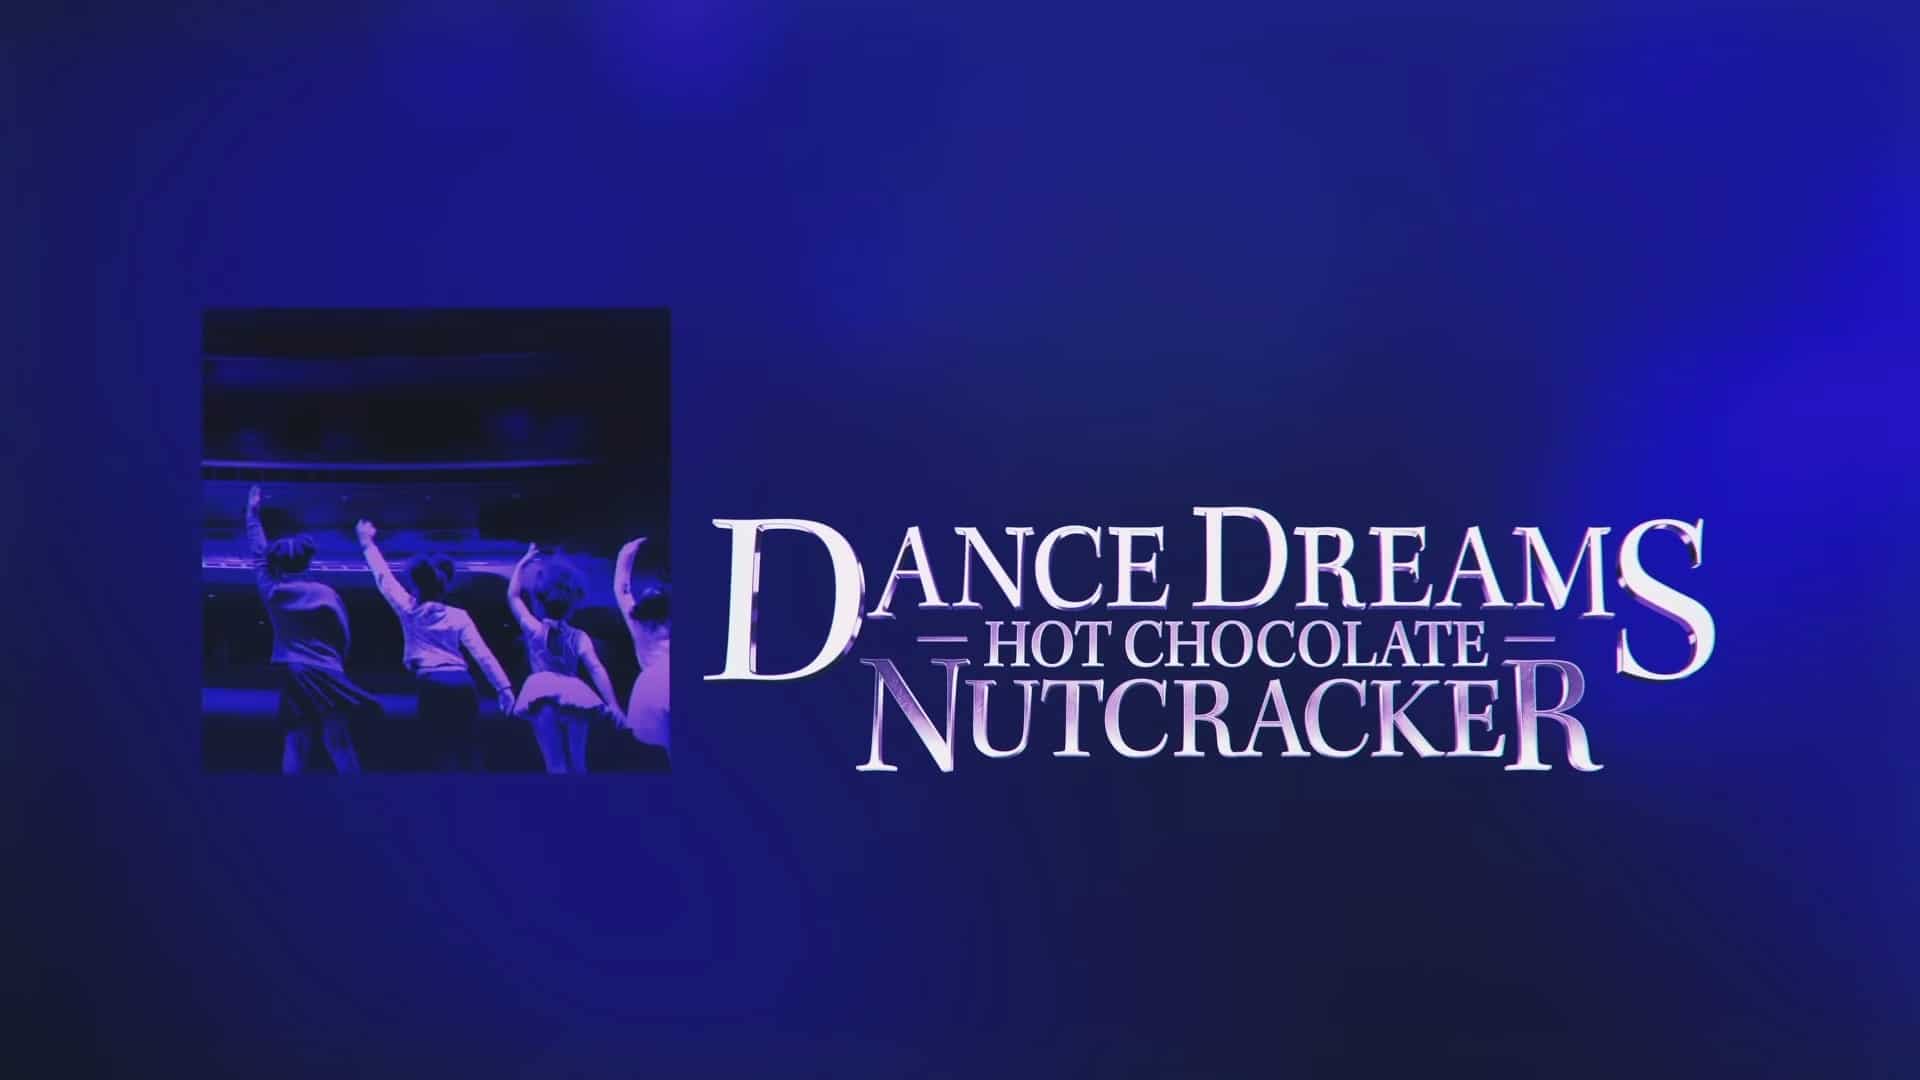 Netflix Dance Dreams Hot Chocolate Nutcracker Trailer, Netflix Debbie Allen Documentary, Netflix Nutcracker Documentary, Coming to Netflix in November 2020